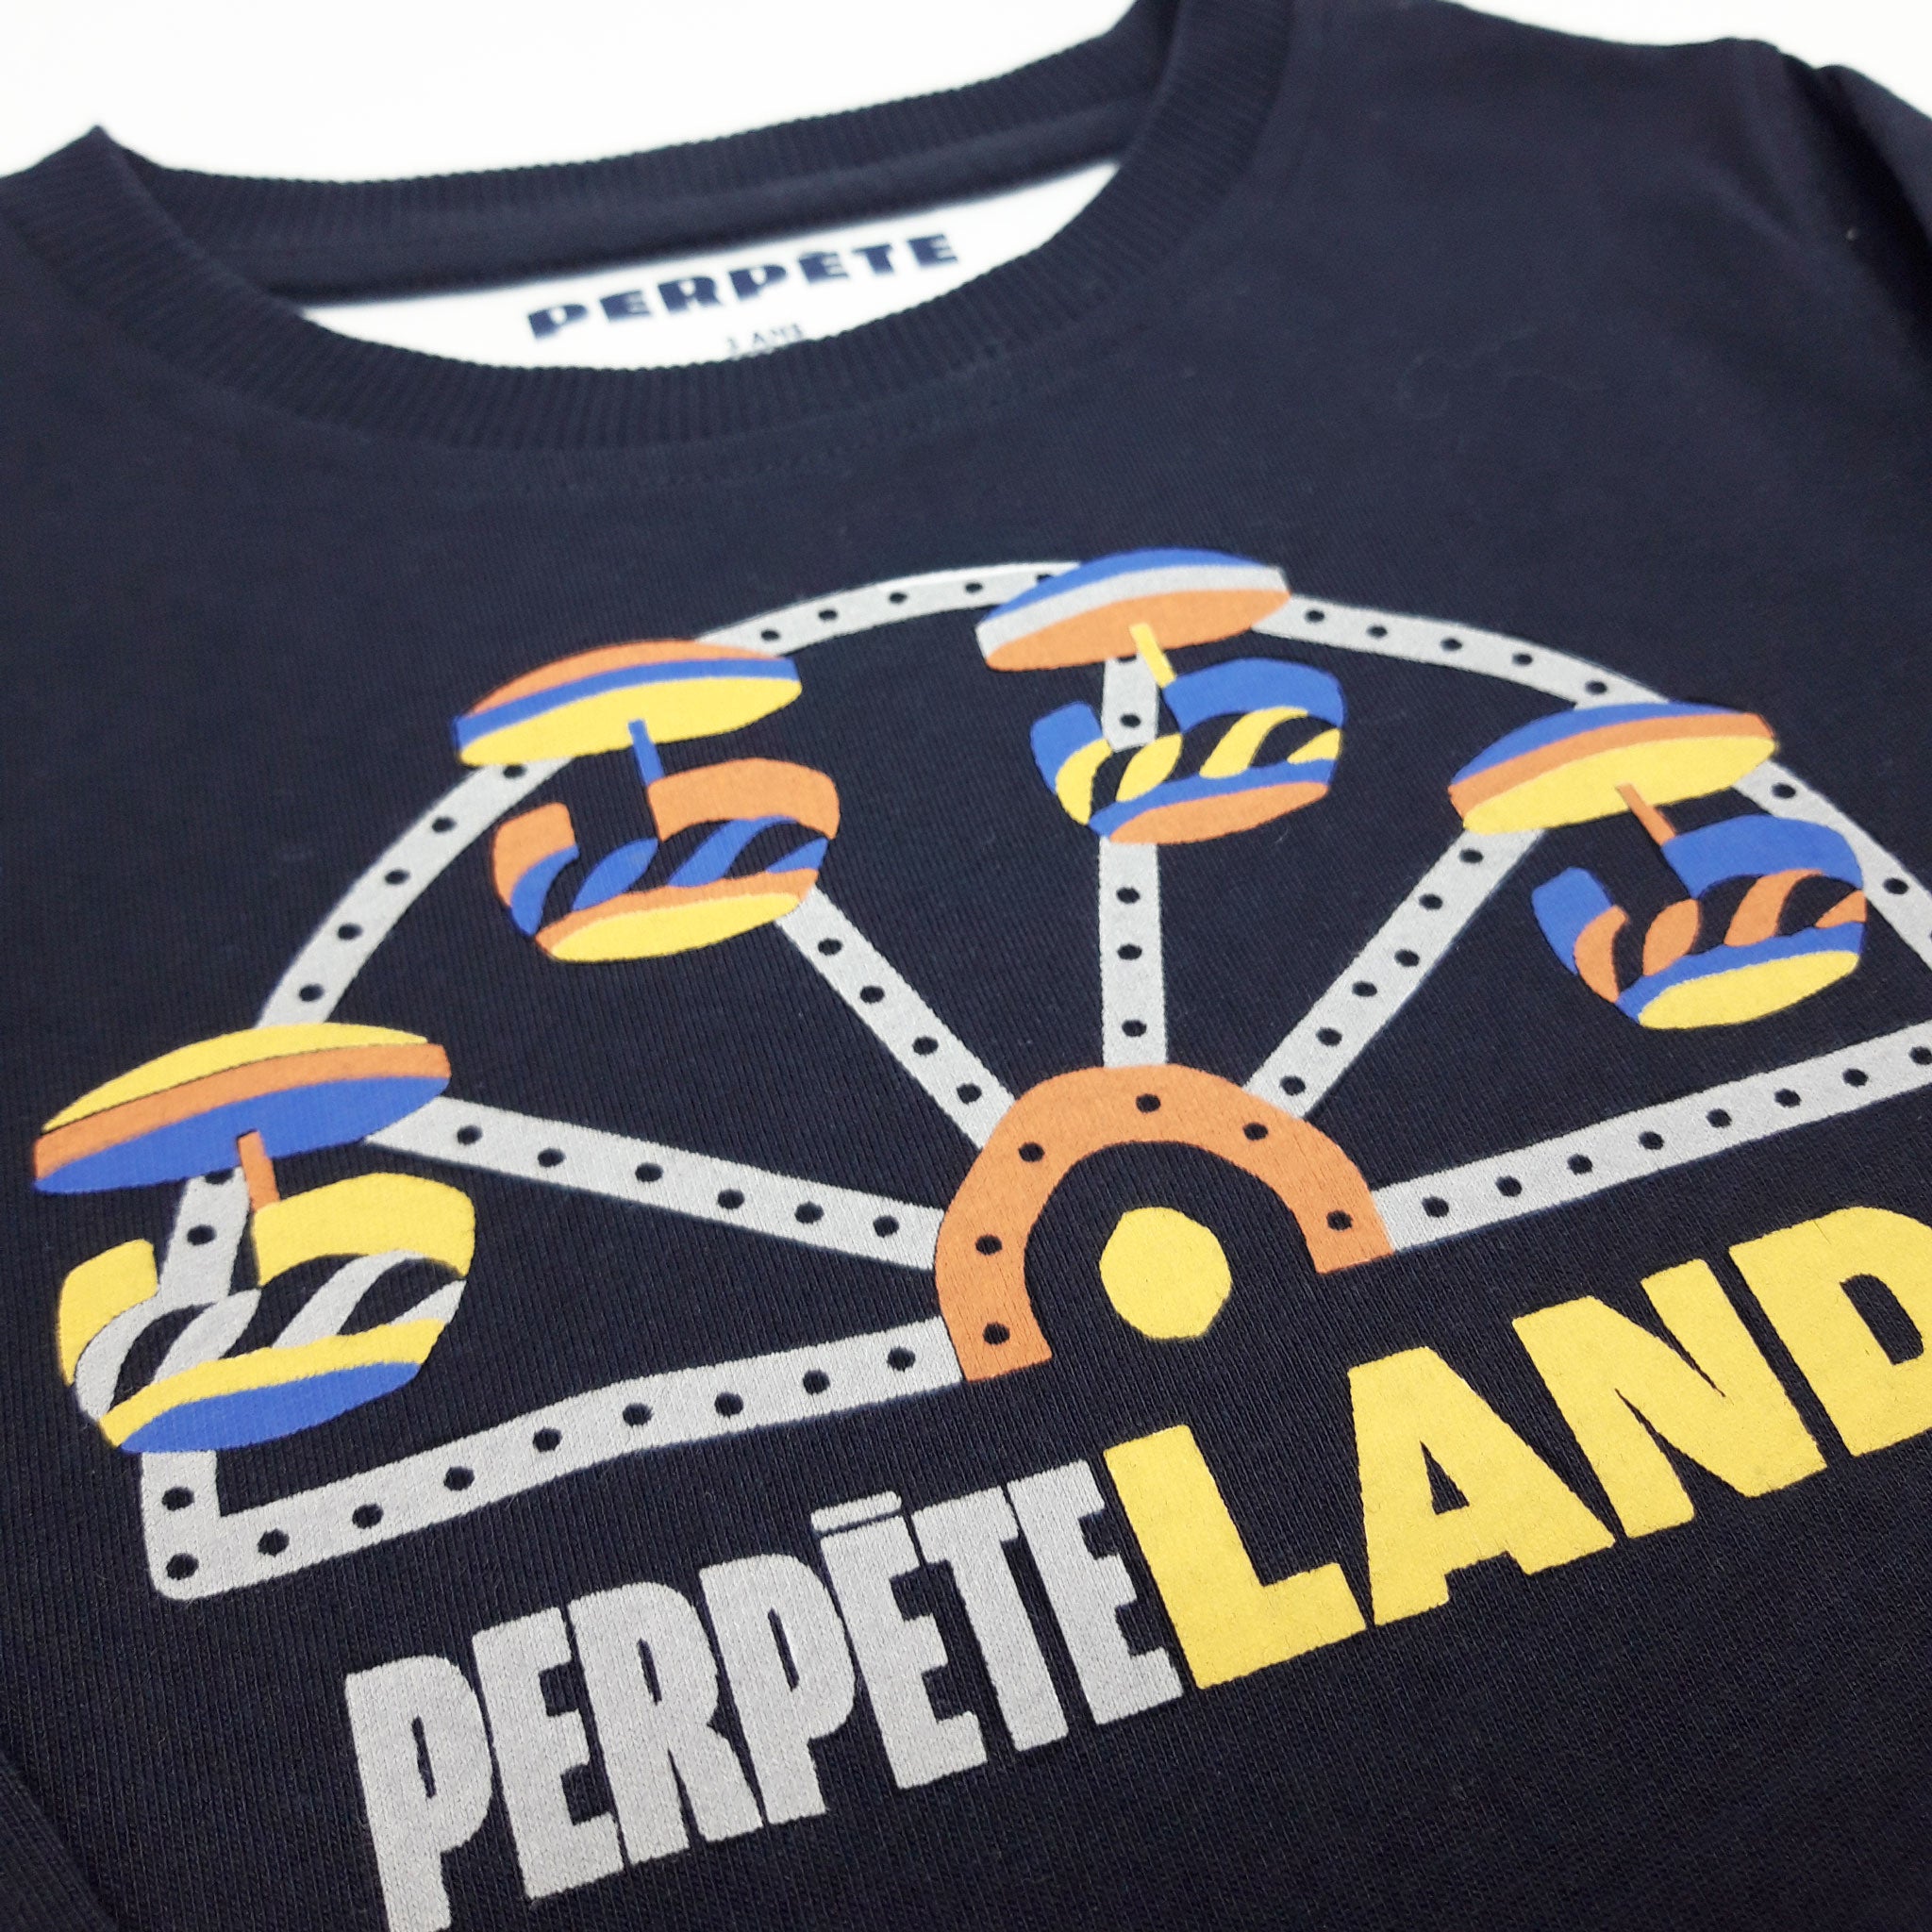 Tee-shirt Perpèteland